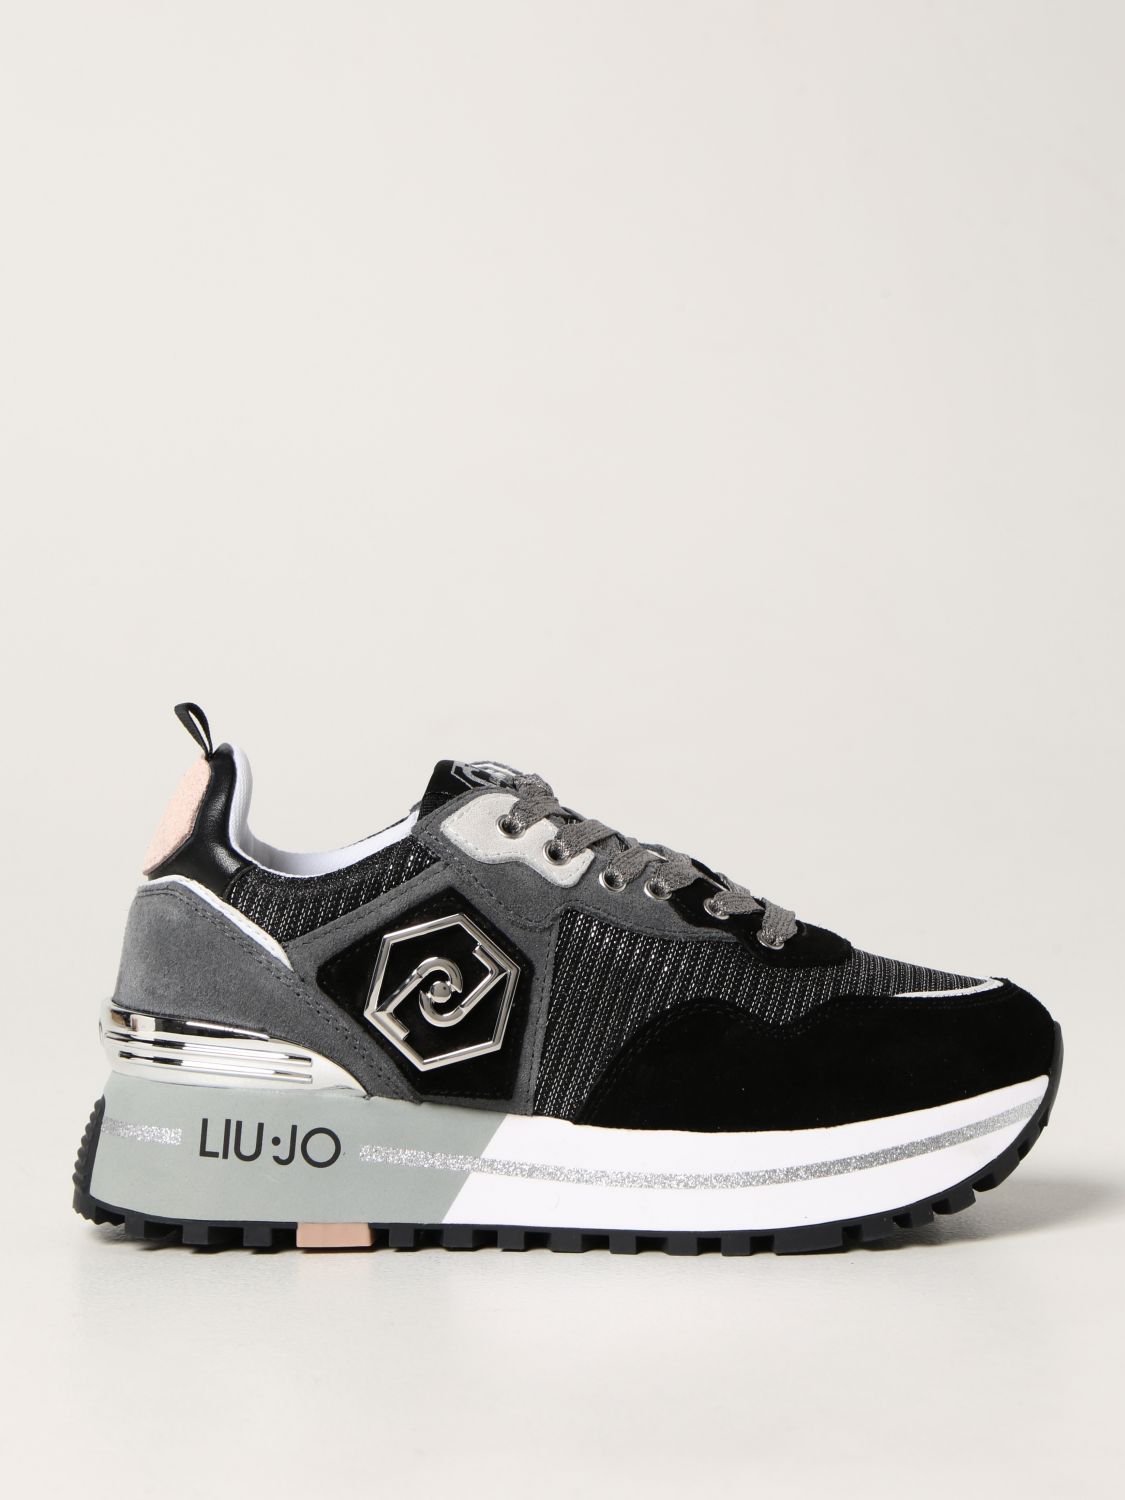 LIU JO: Maxi Wonder sneakers in suede - Black | Liu Jo sneakers ...